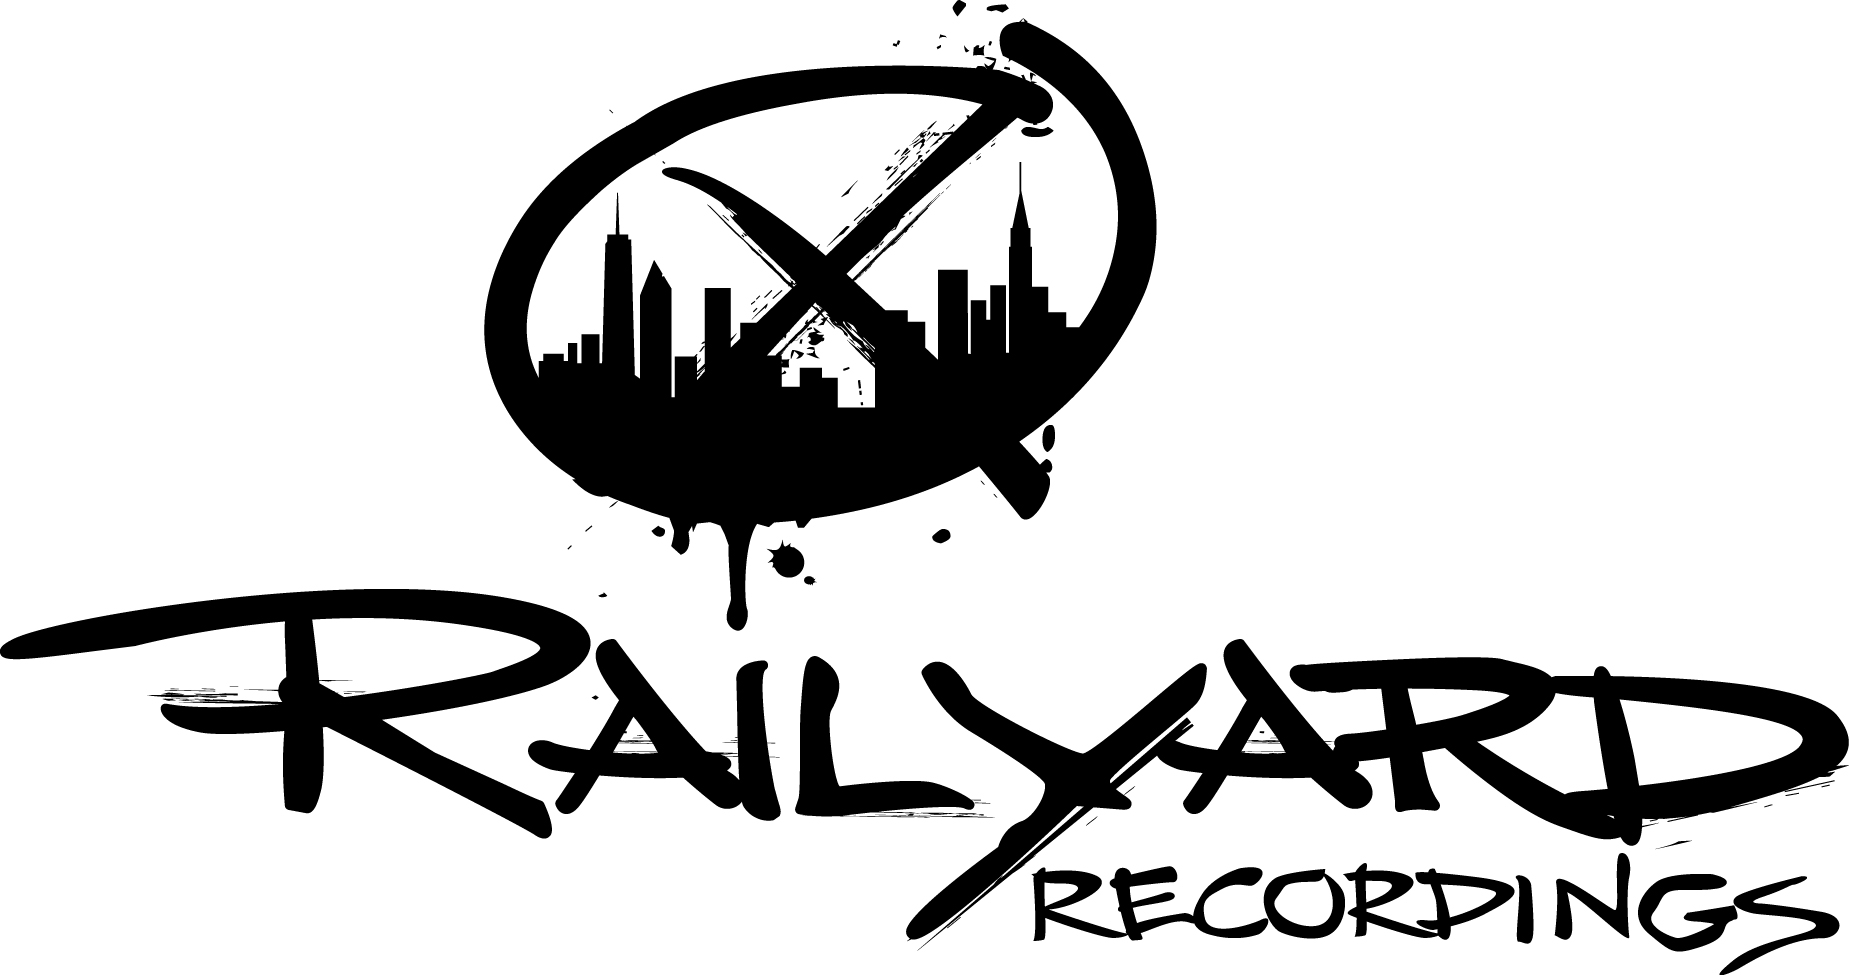 Railyard Recordings Logo